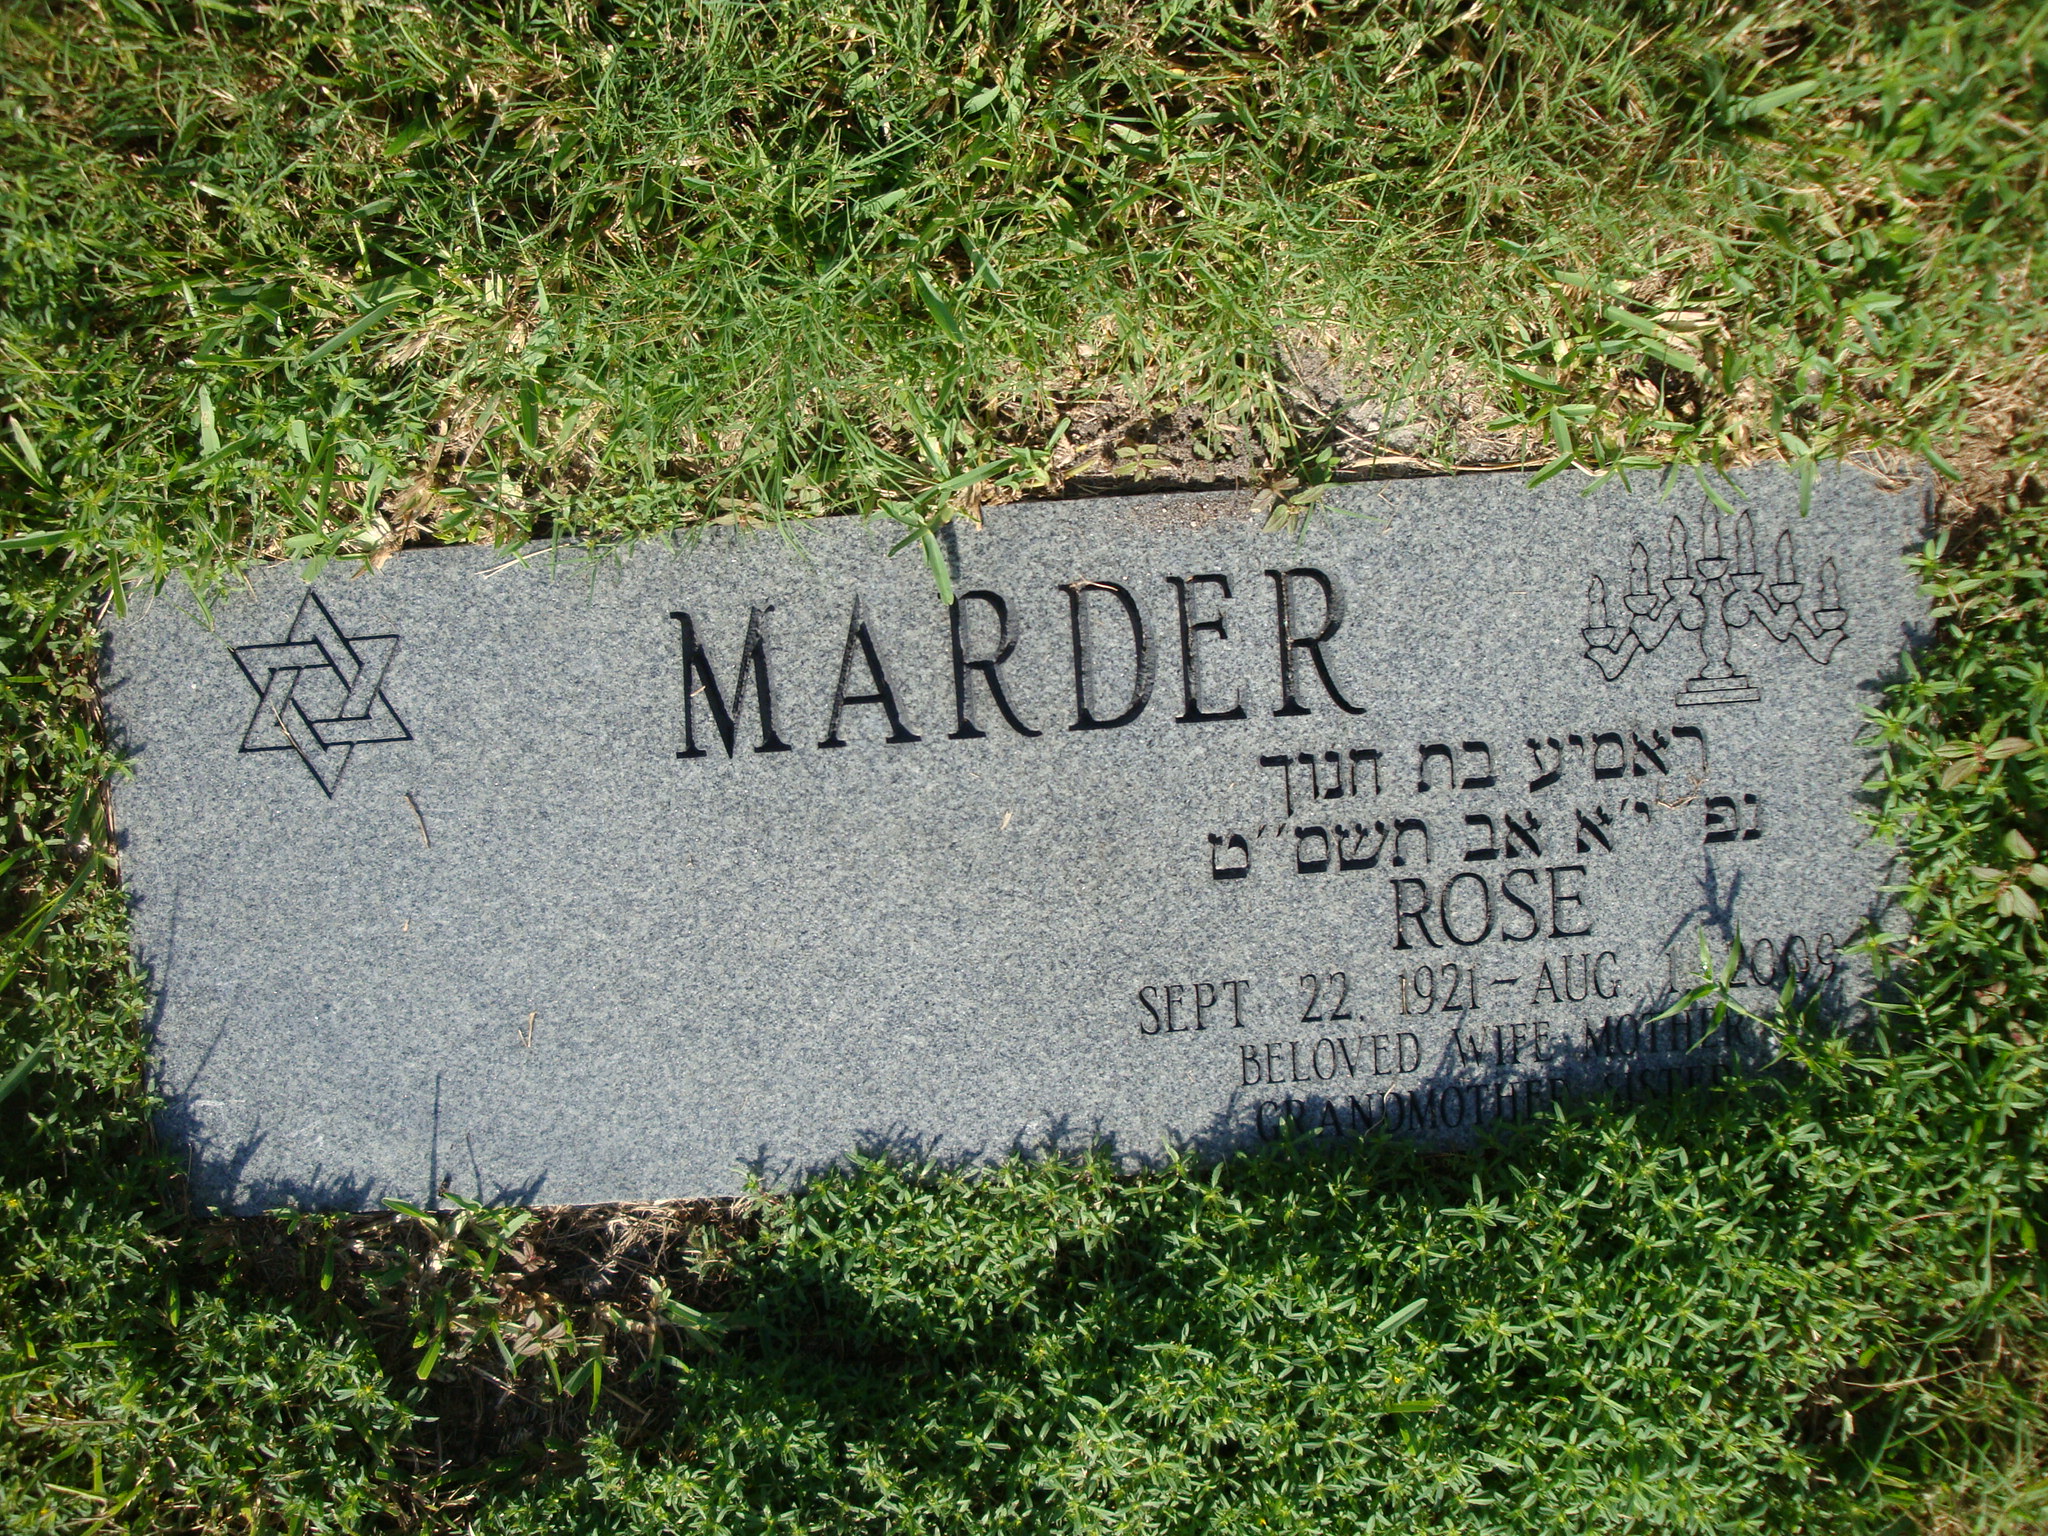 Rose Marder